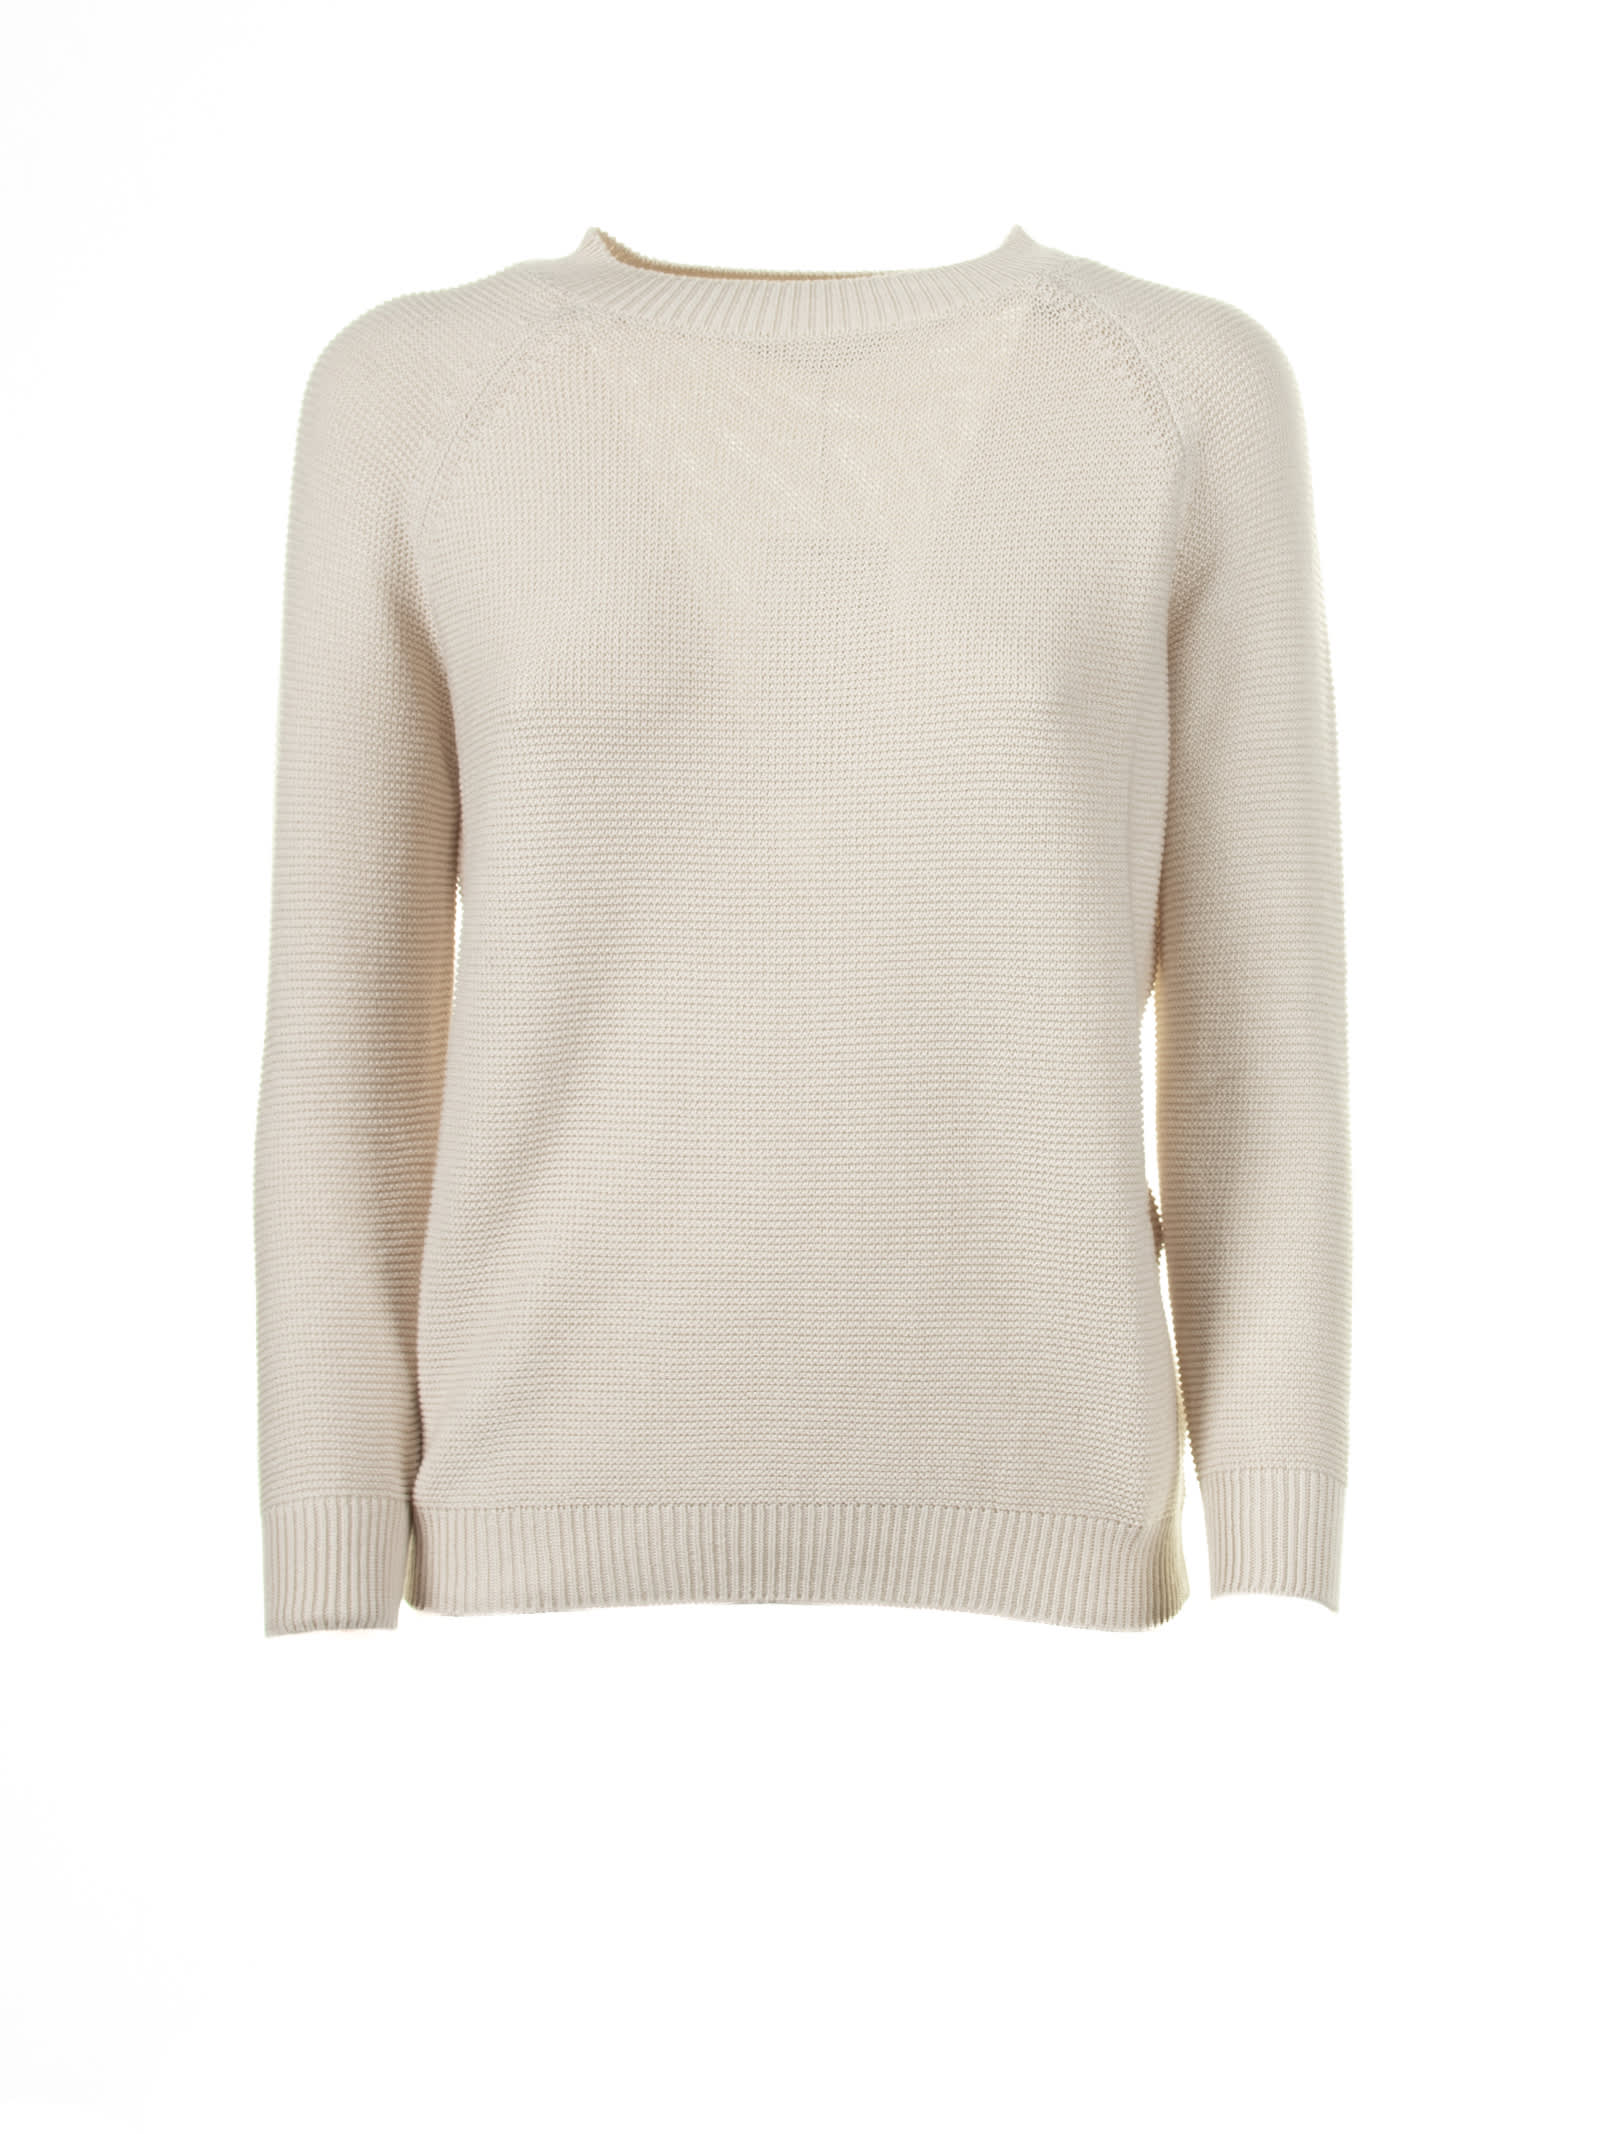 Soft White Cotton Sweater